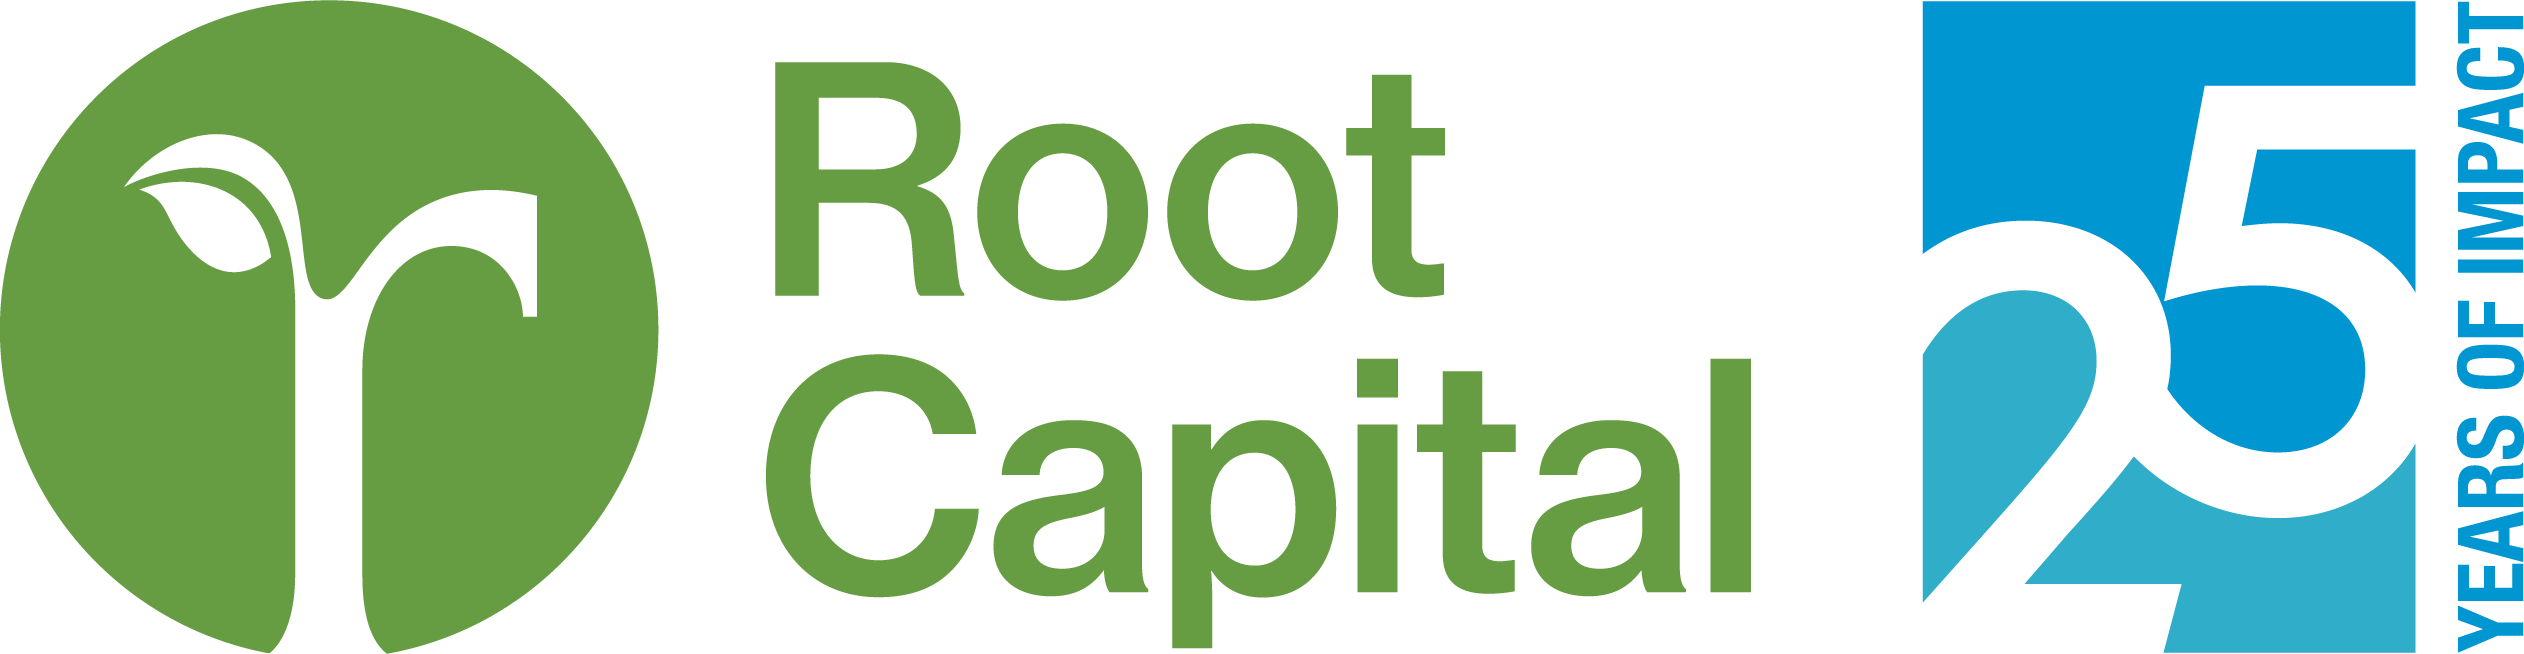 Root Capital Logo